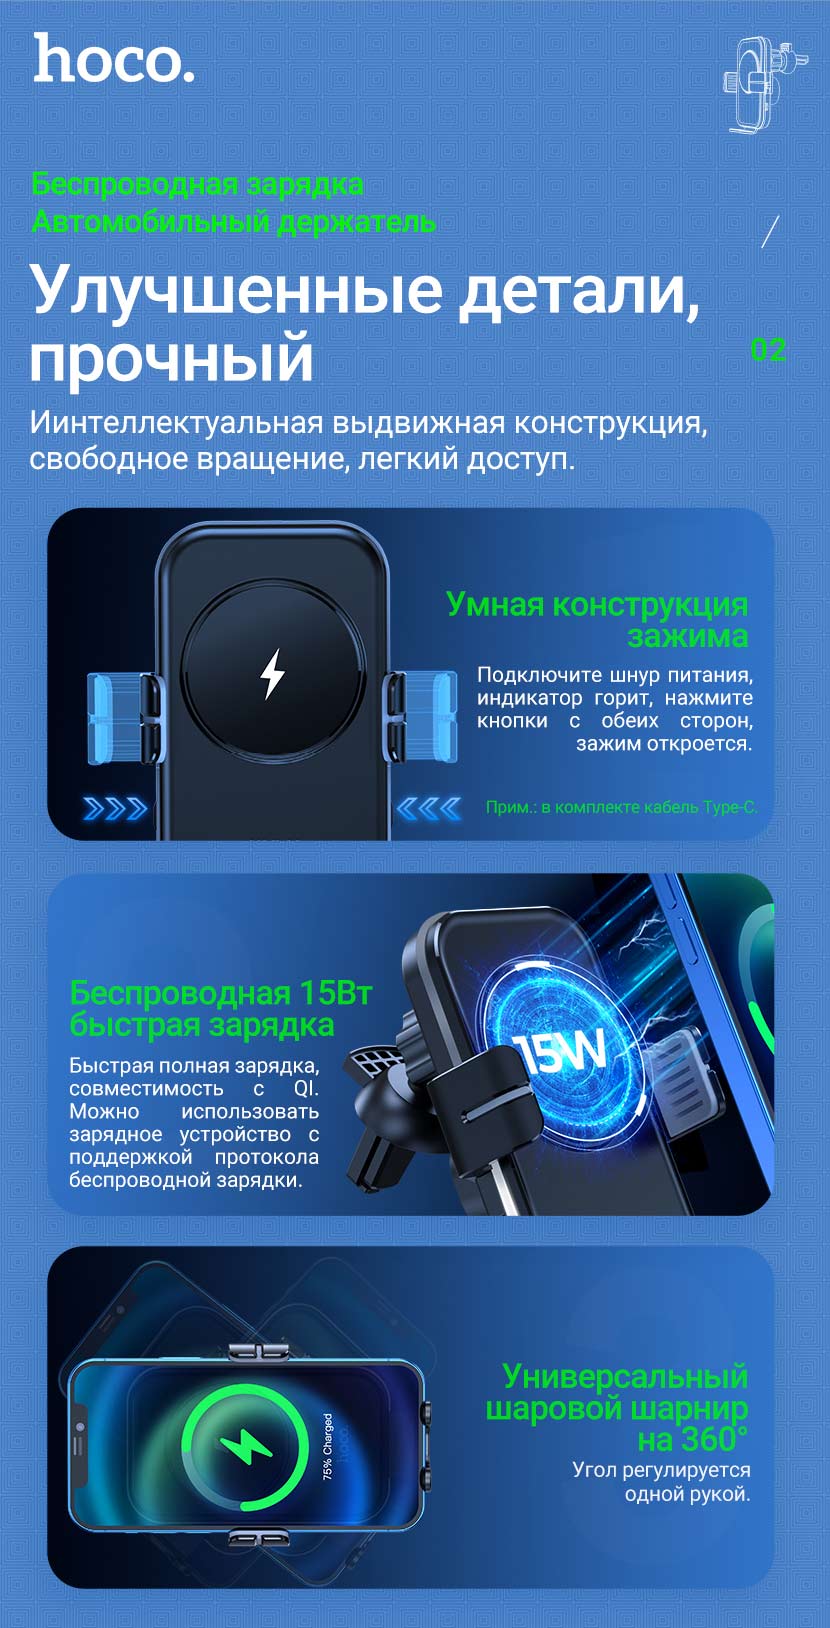 hoco news ca80 buddy smart wireless charging car holder details ru